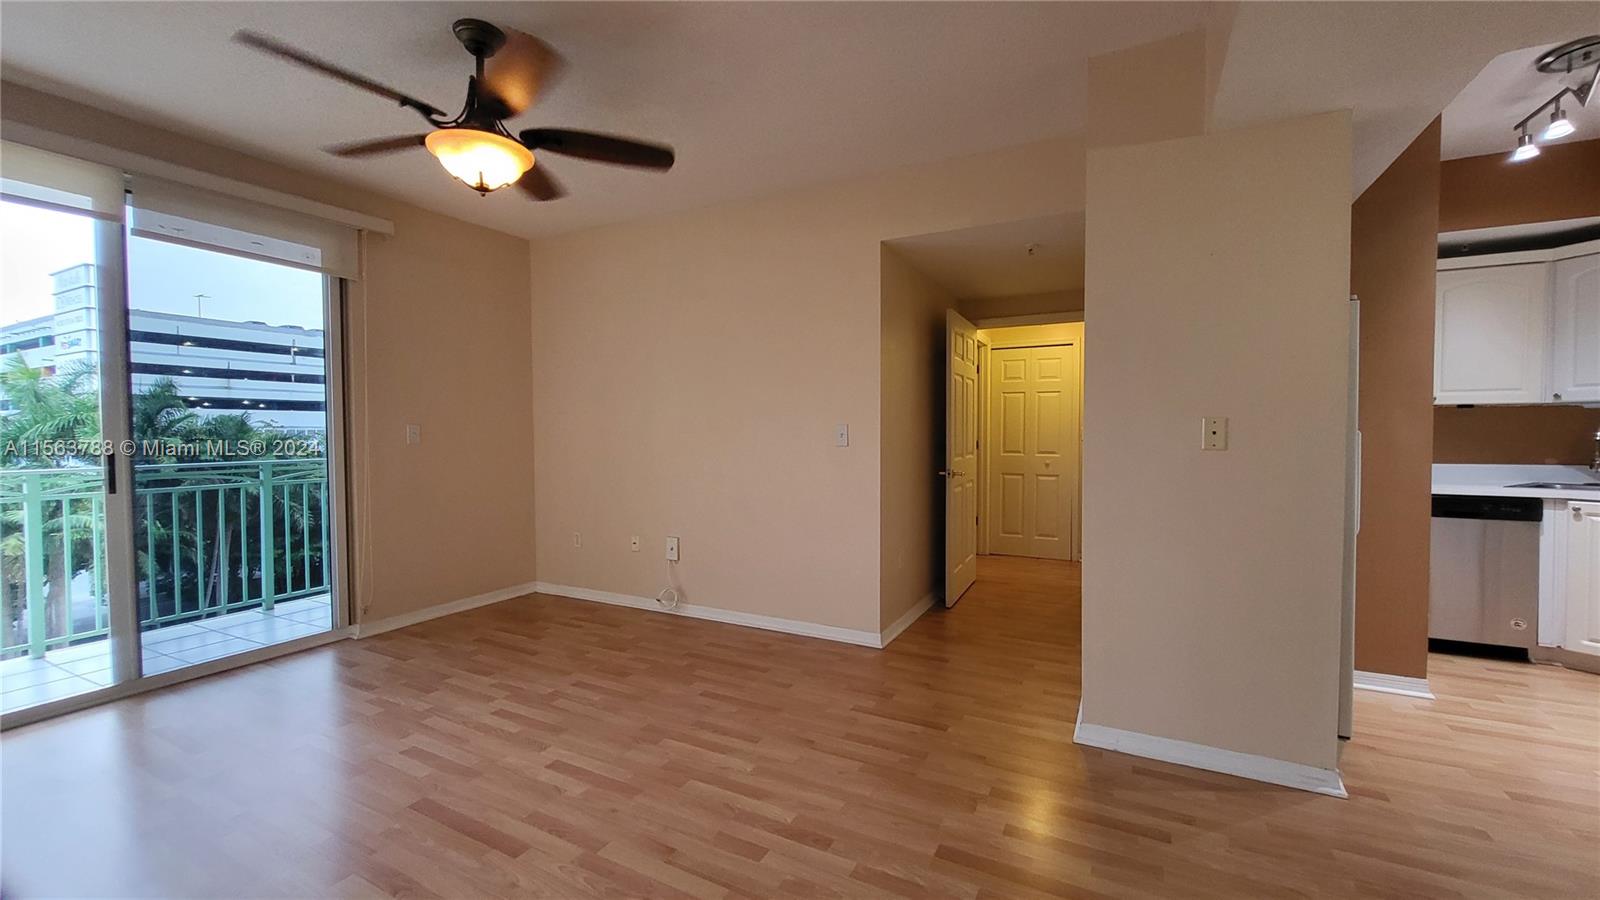 Rental Property at 3500 Coral Way 606, Miami, Broward County, Florida - Bedrooms: 1 
Bathrooms: 1  - $2,200 MO.